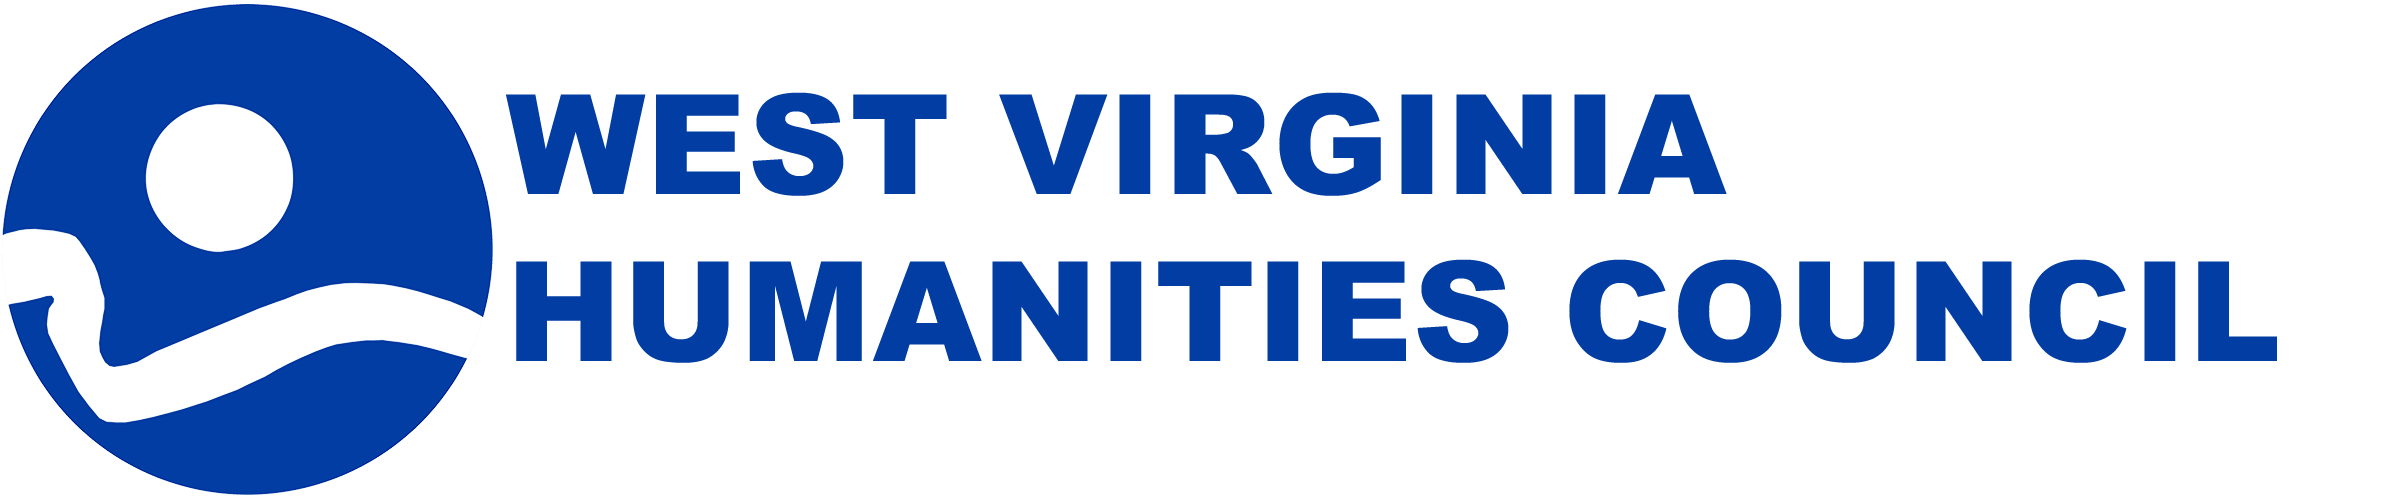 WV Humanties Council Logo